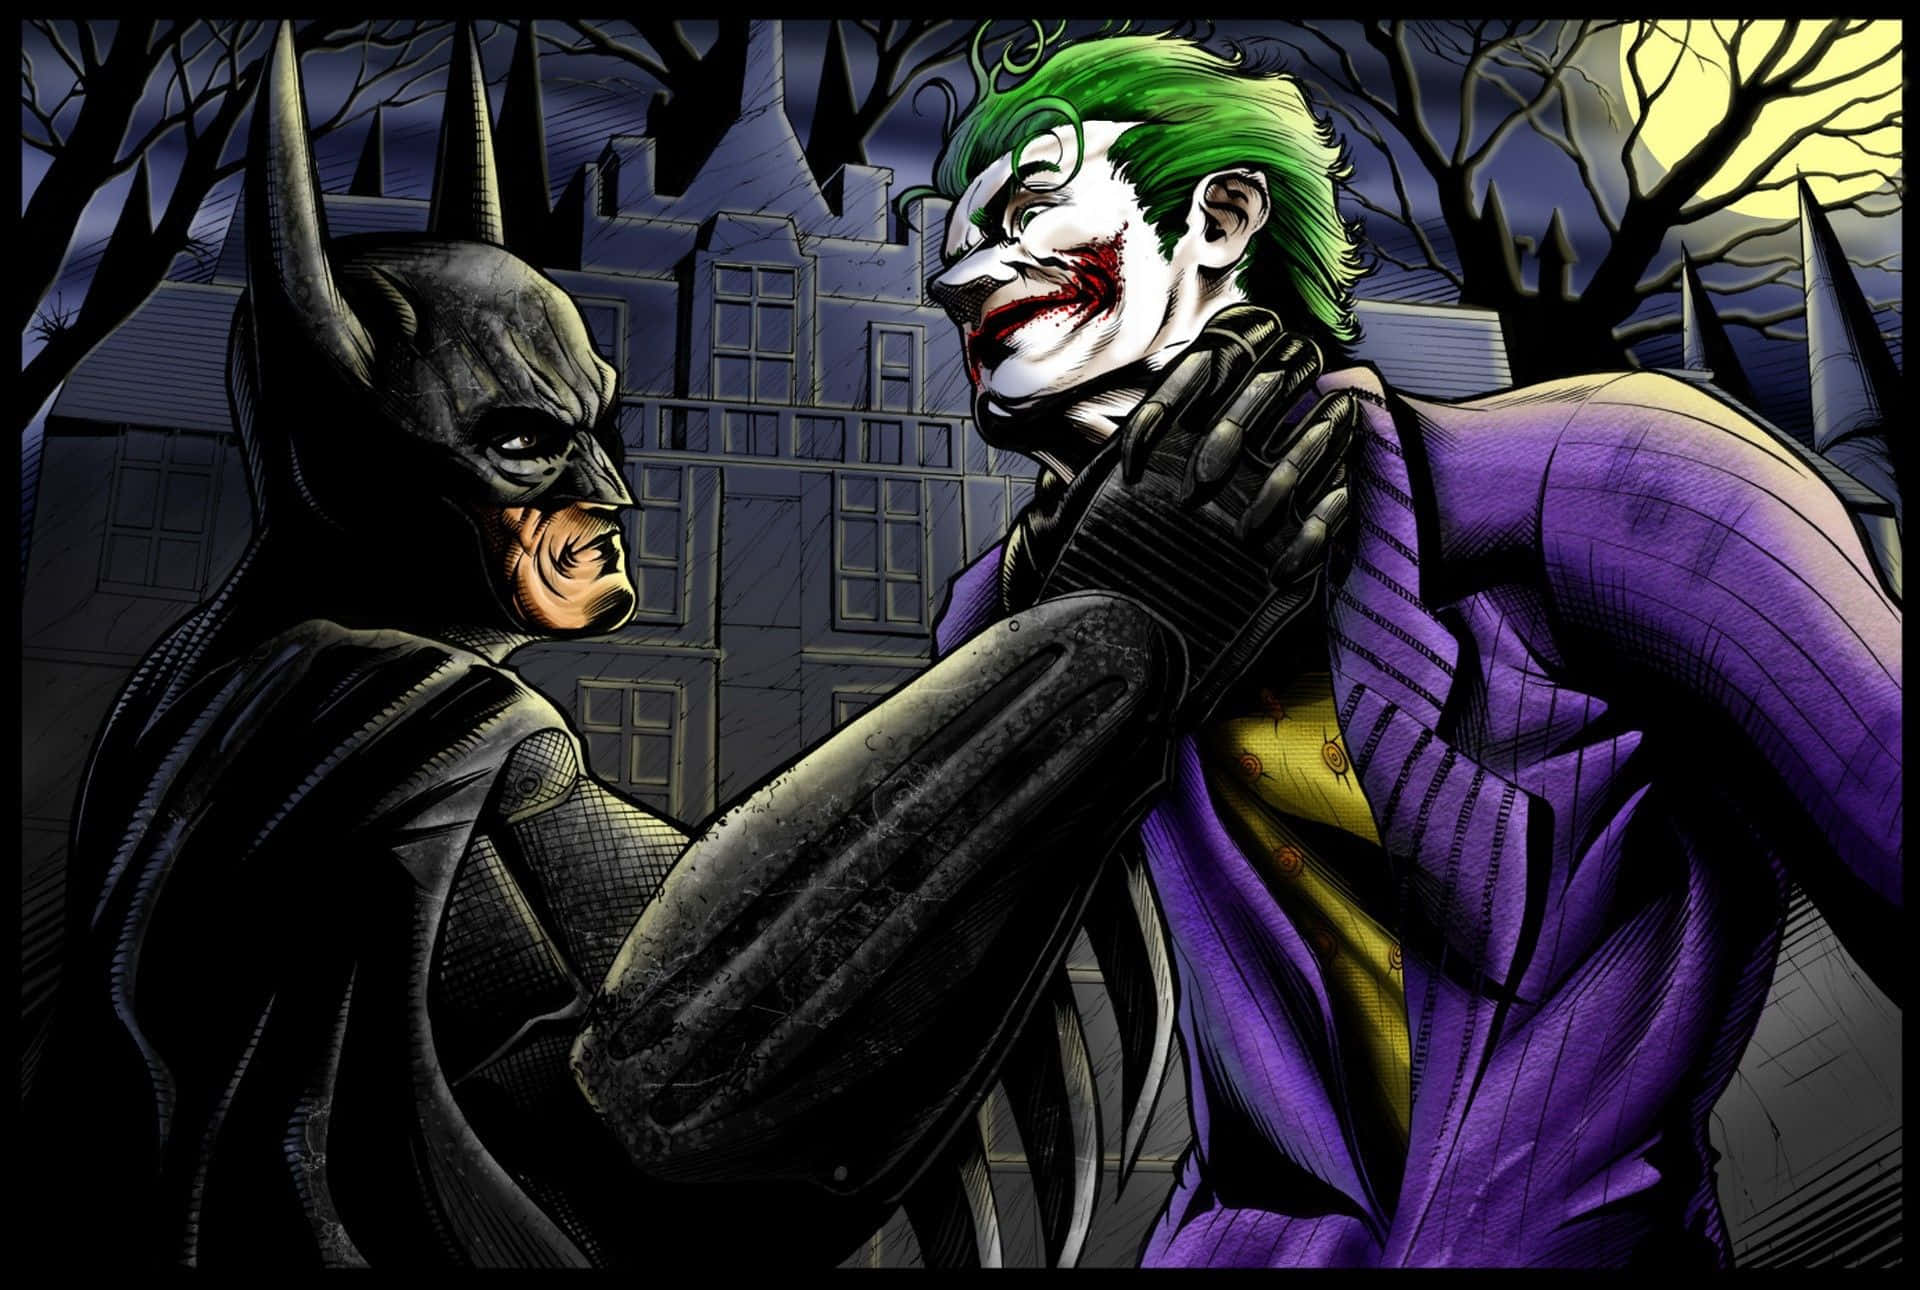 Epic Joker imagery from comic series Wallpaper